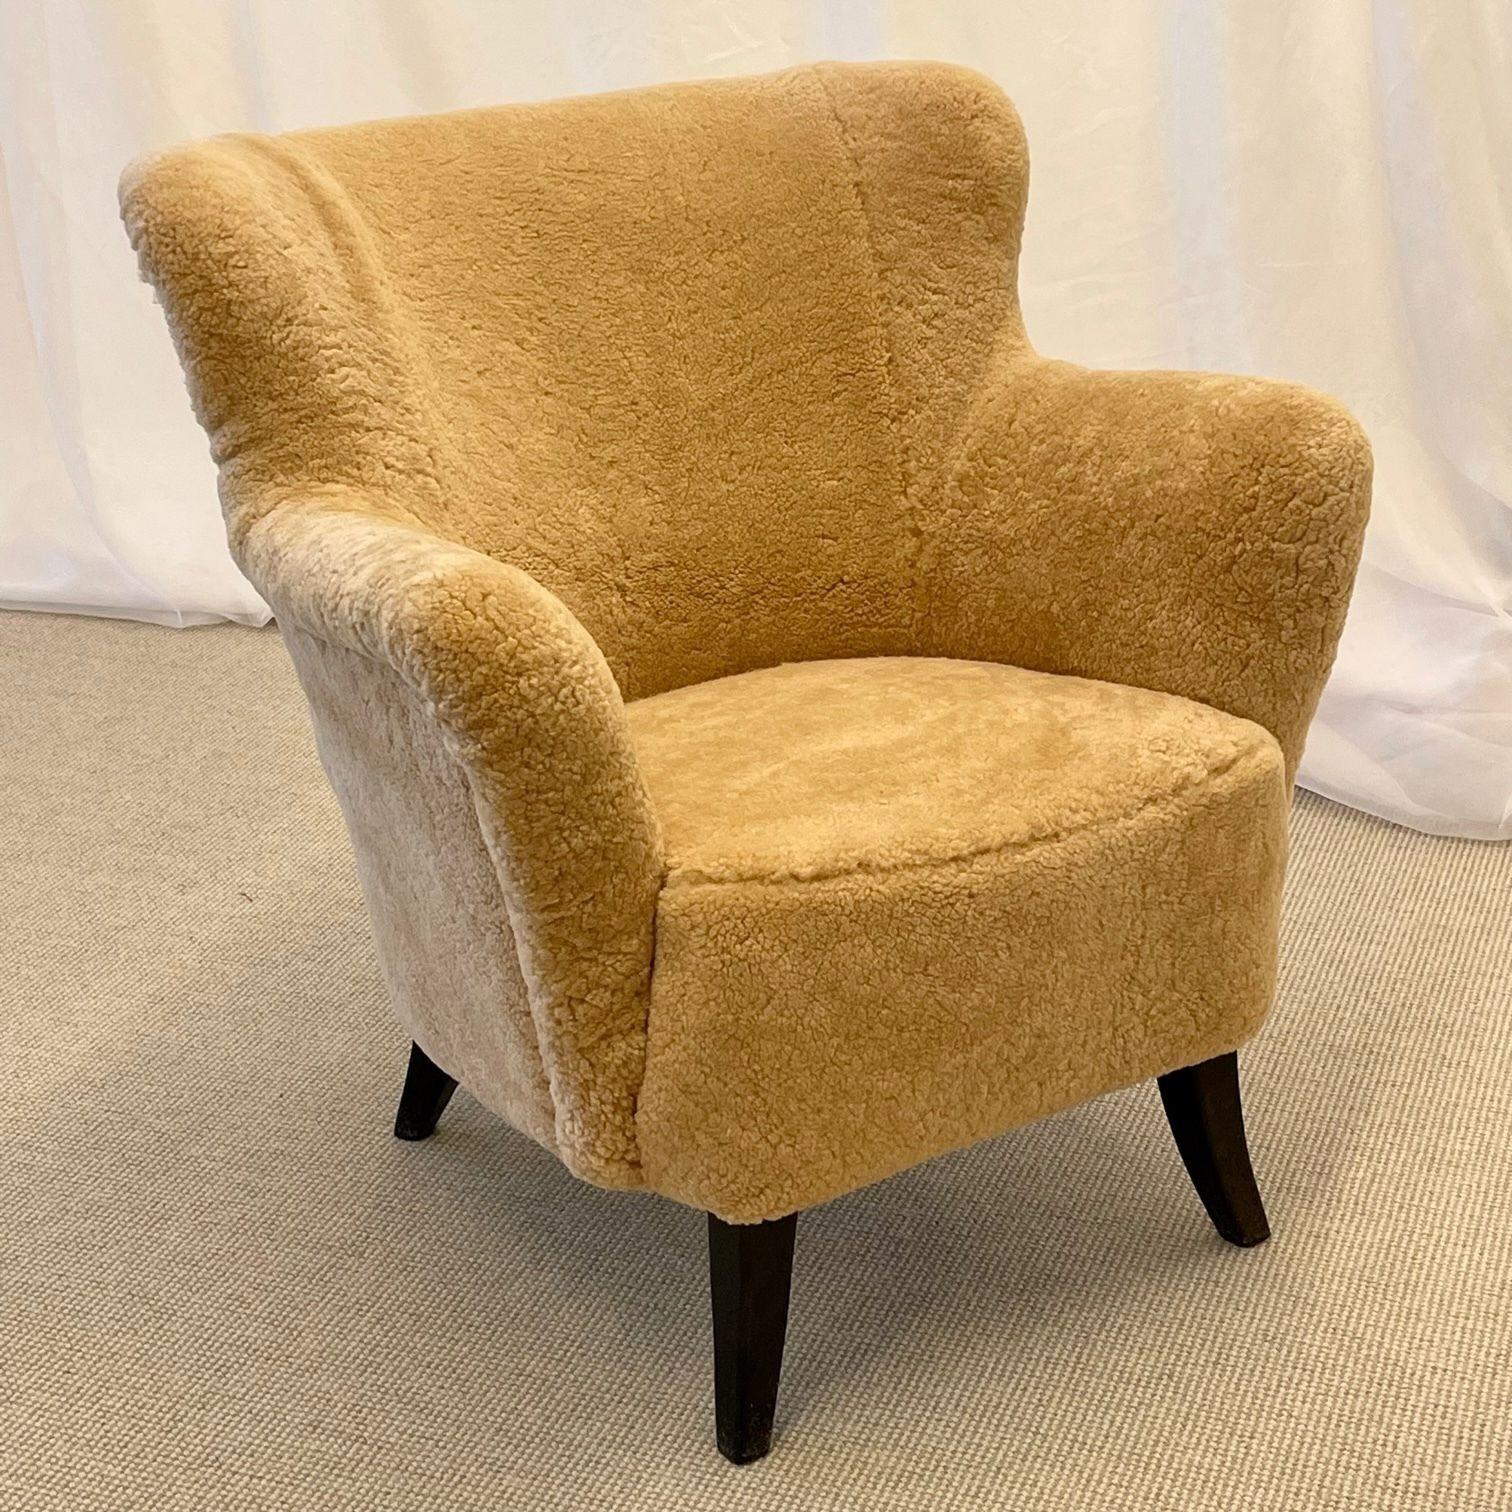 Danish Mid-Century Modern, Lounge Chairs, Sheepskin, Ebonized Wood, 1950s For Sale 4